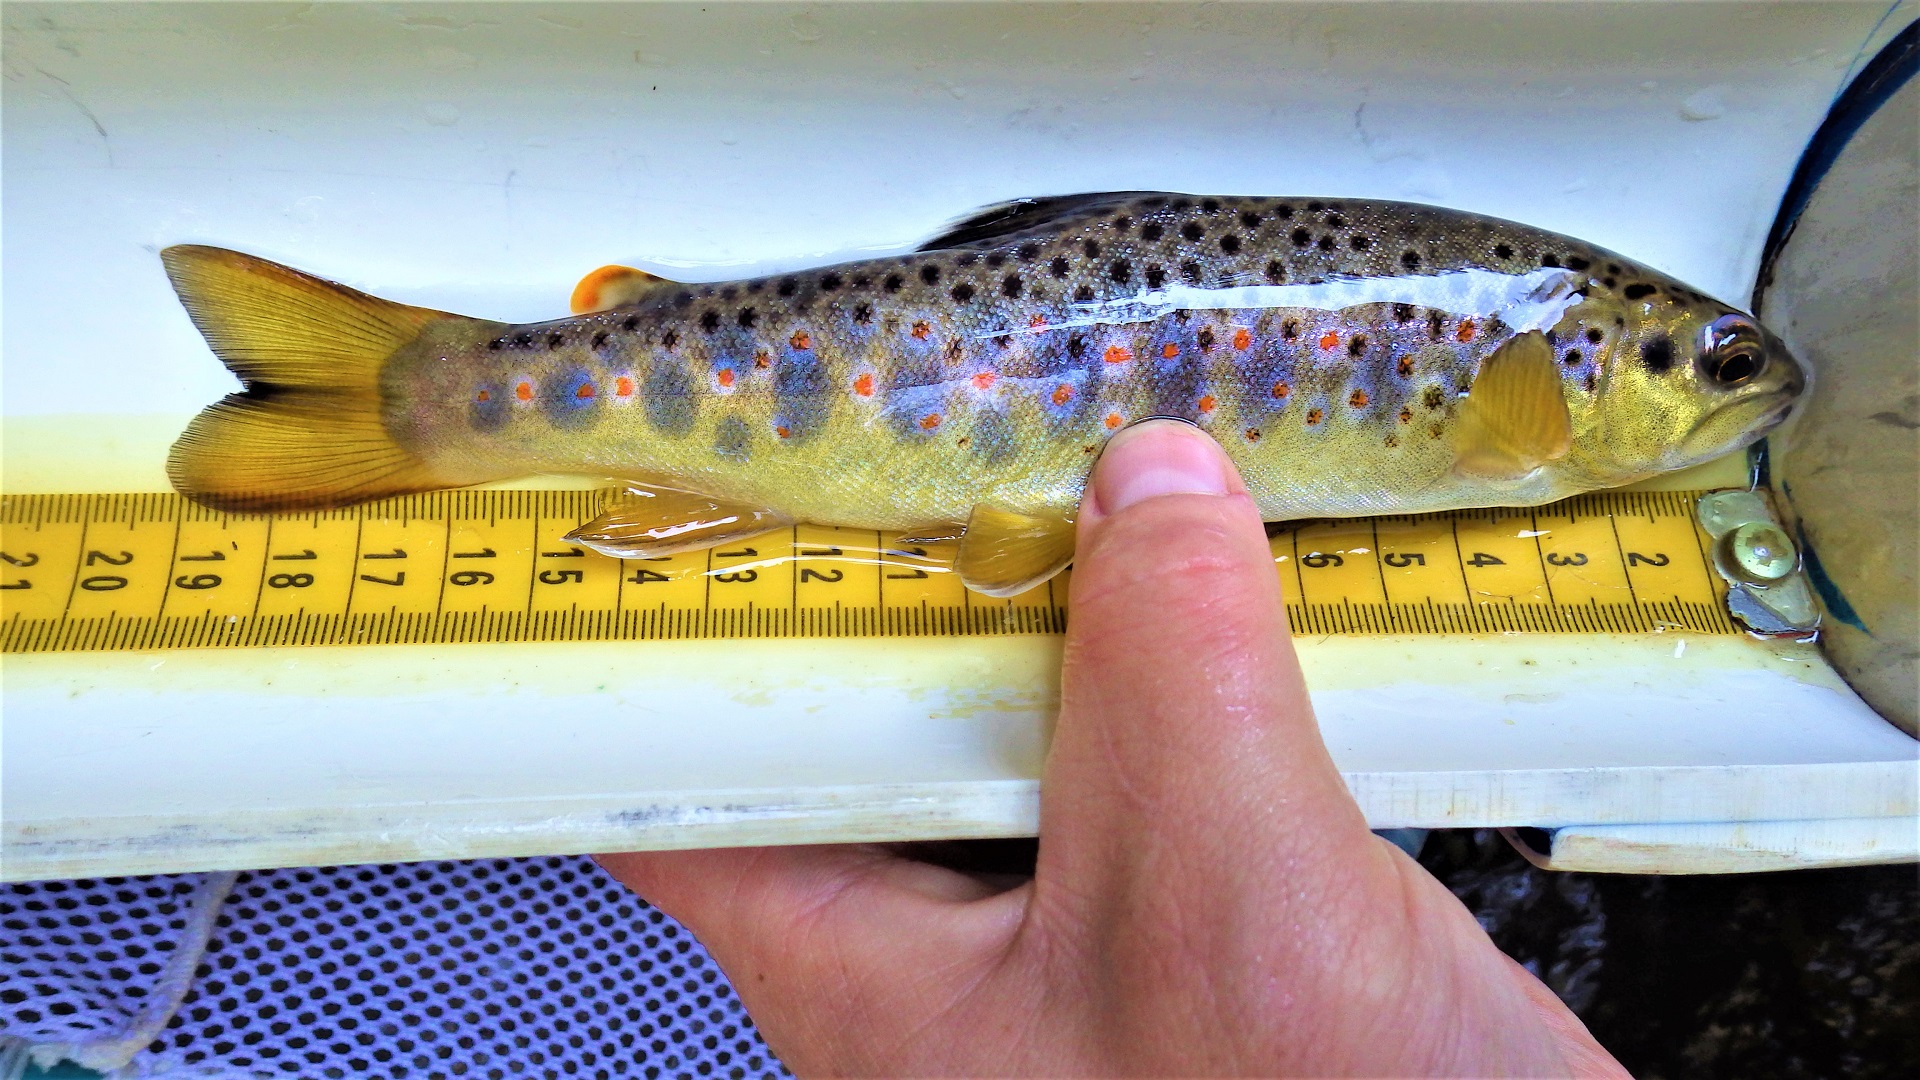 A trout in a measuring board.